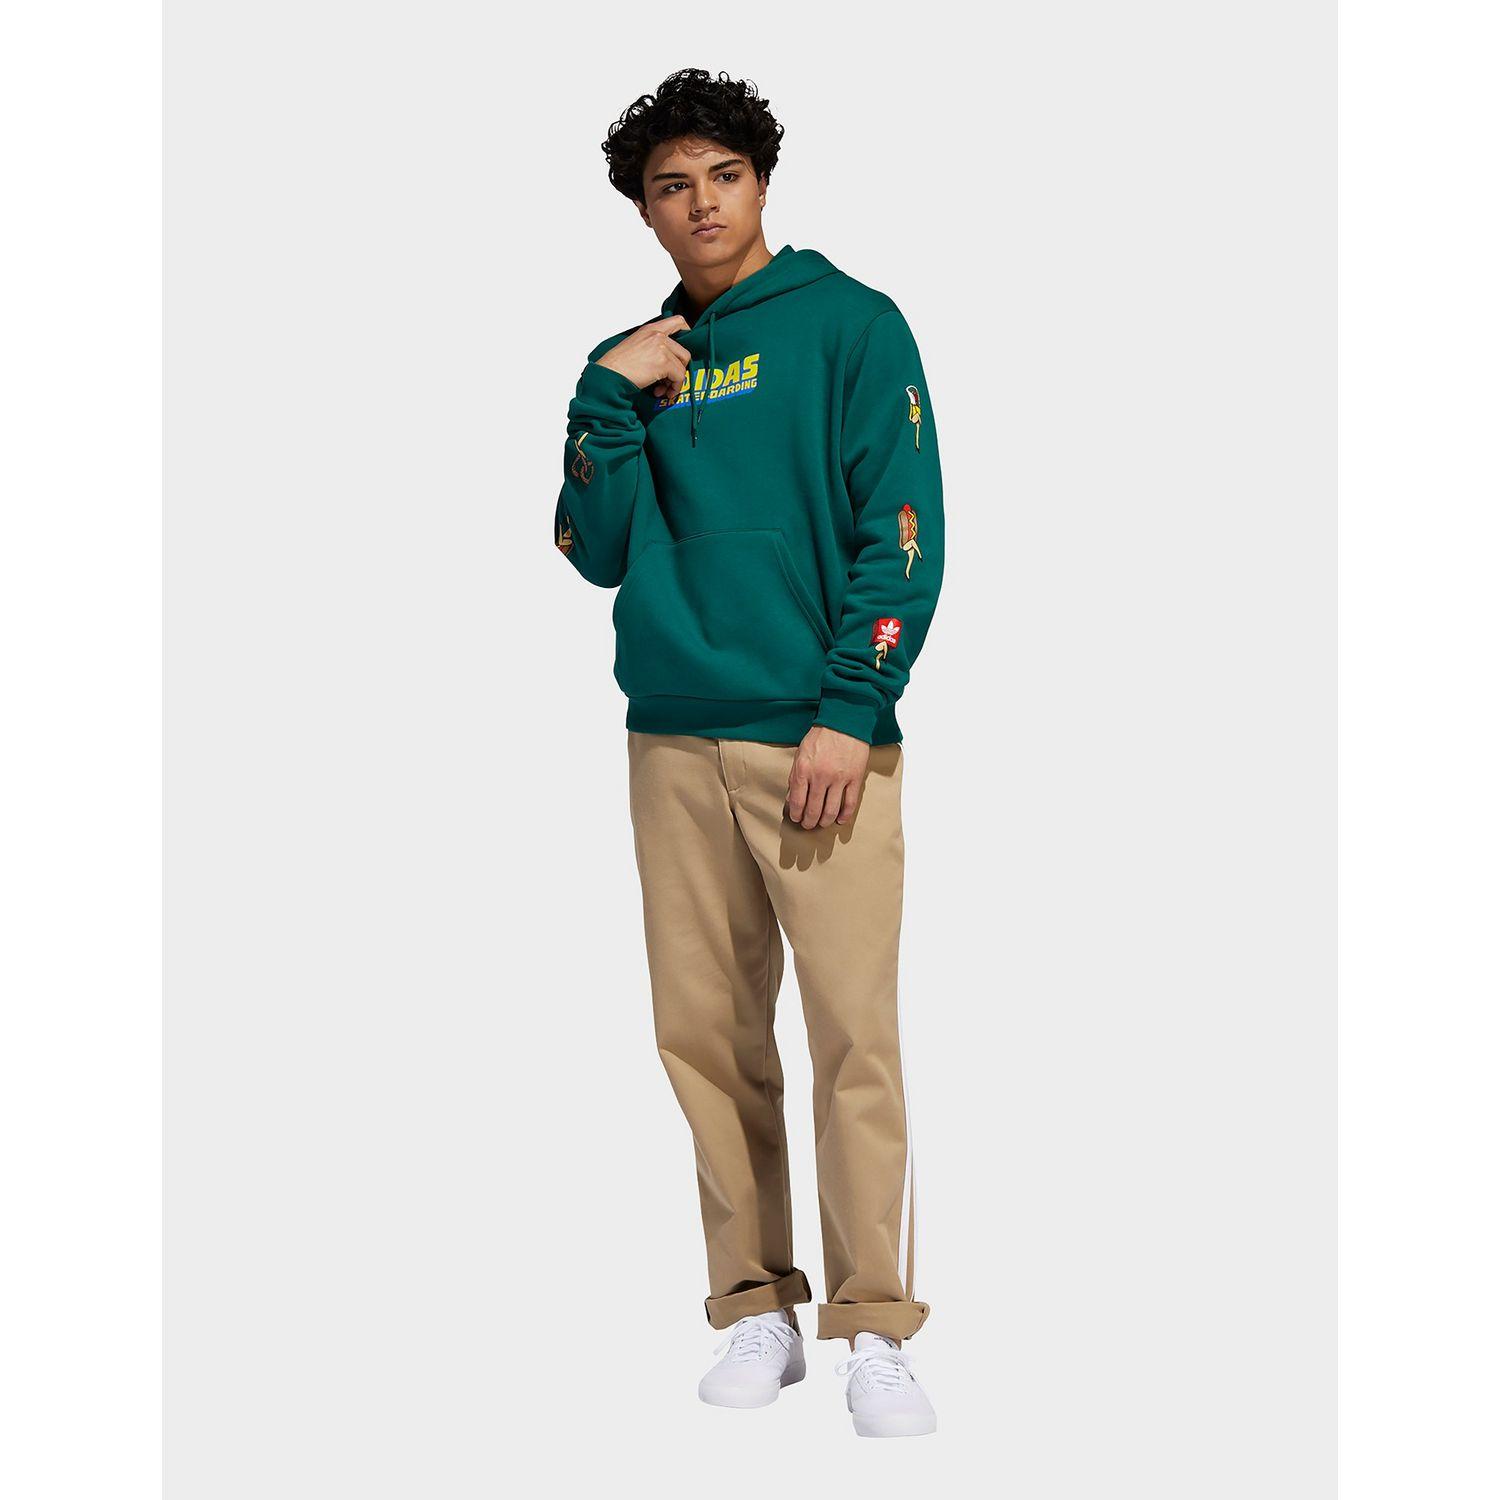 adidas Originals Cotton Food Party Sweatshirt in Green for Men - Lyst